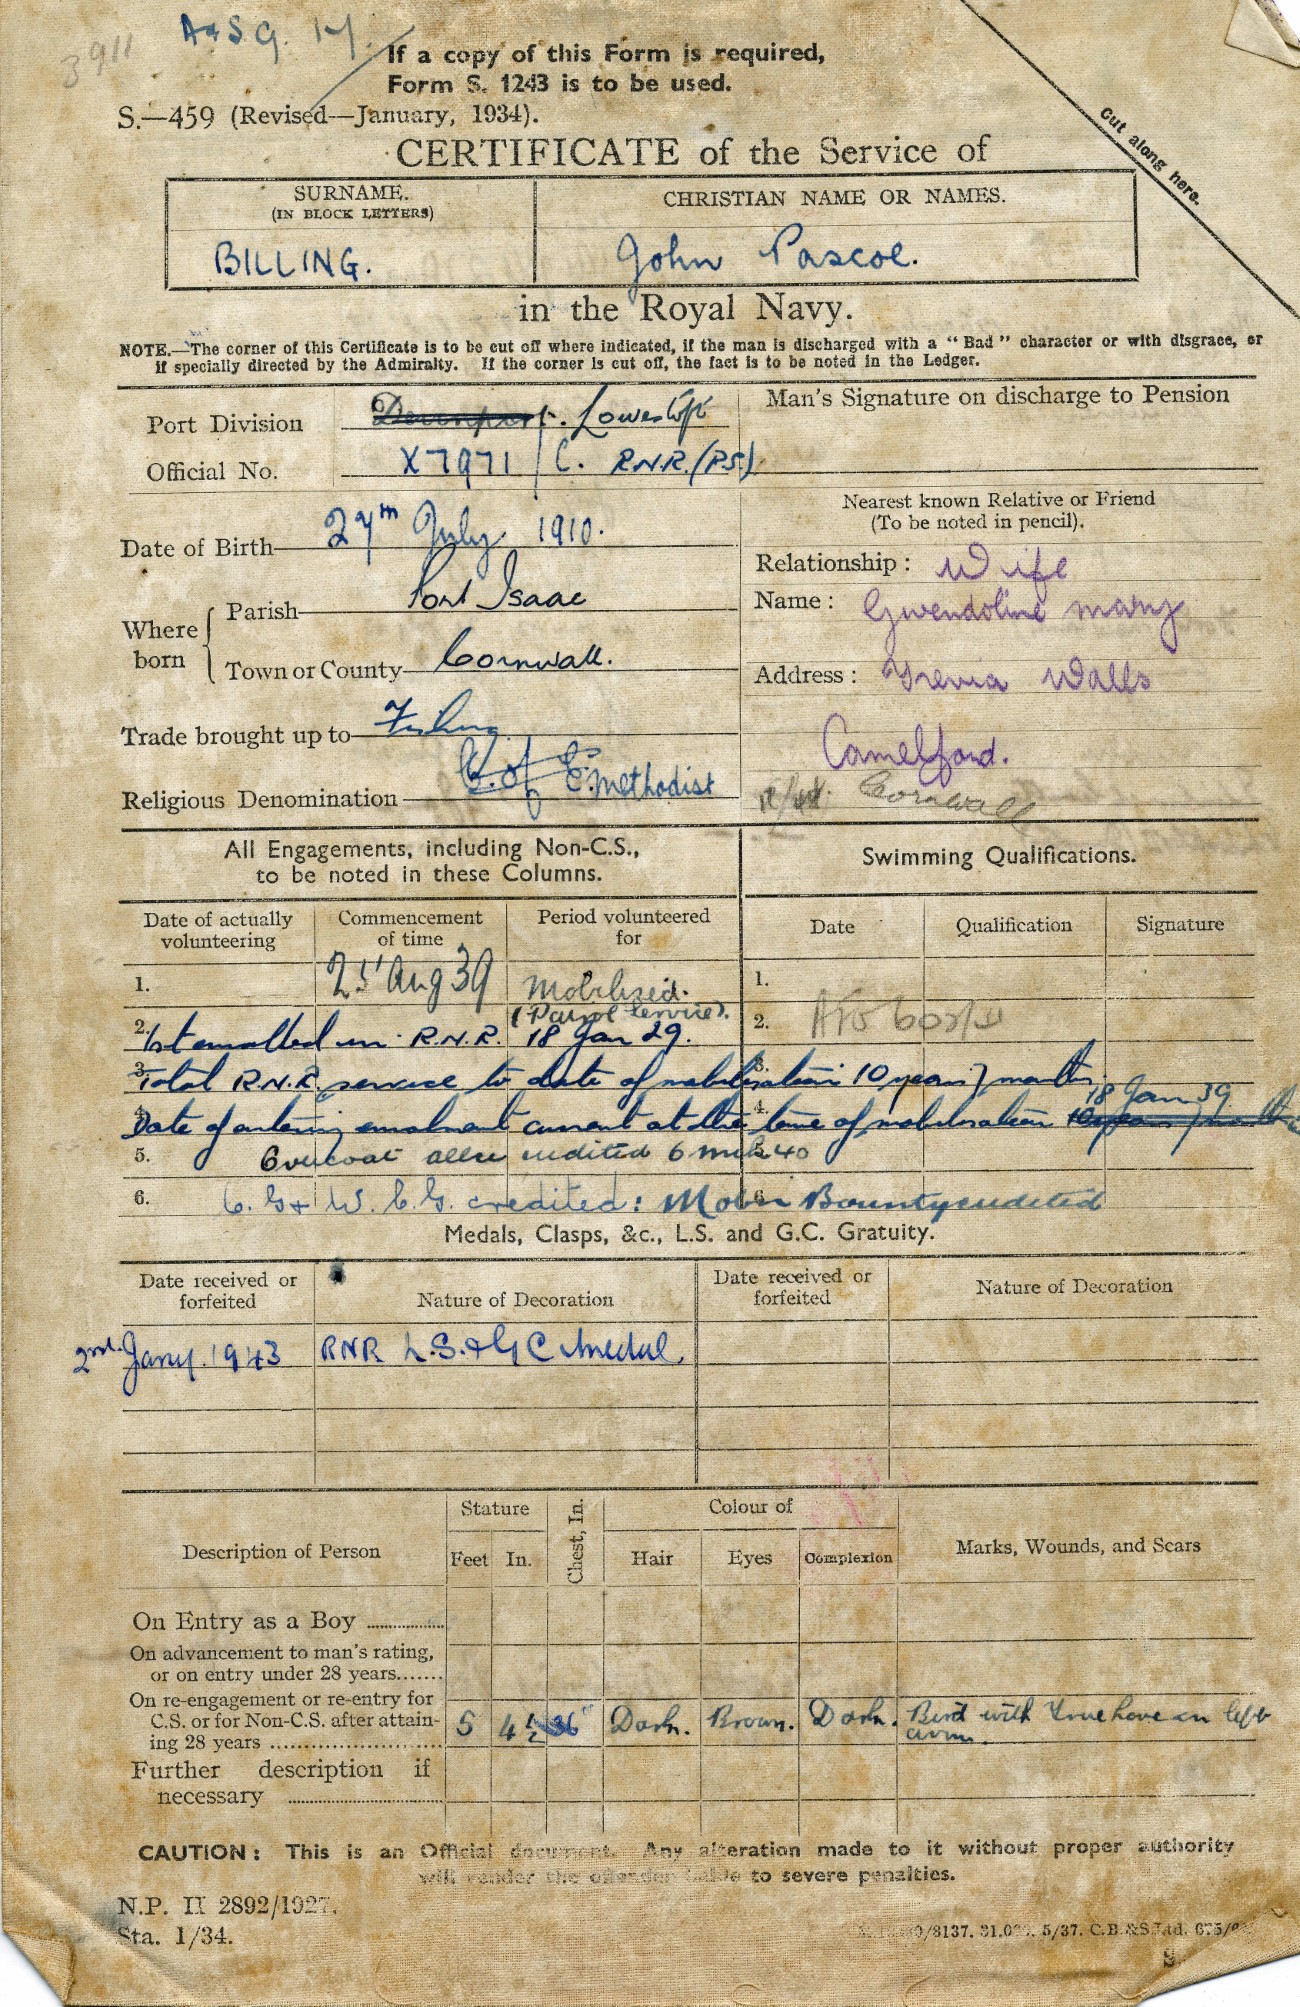 John Pascoe Billing's Royal Naval service record